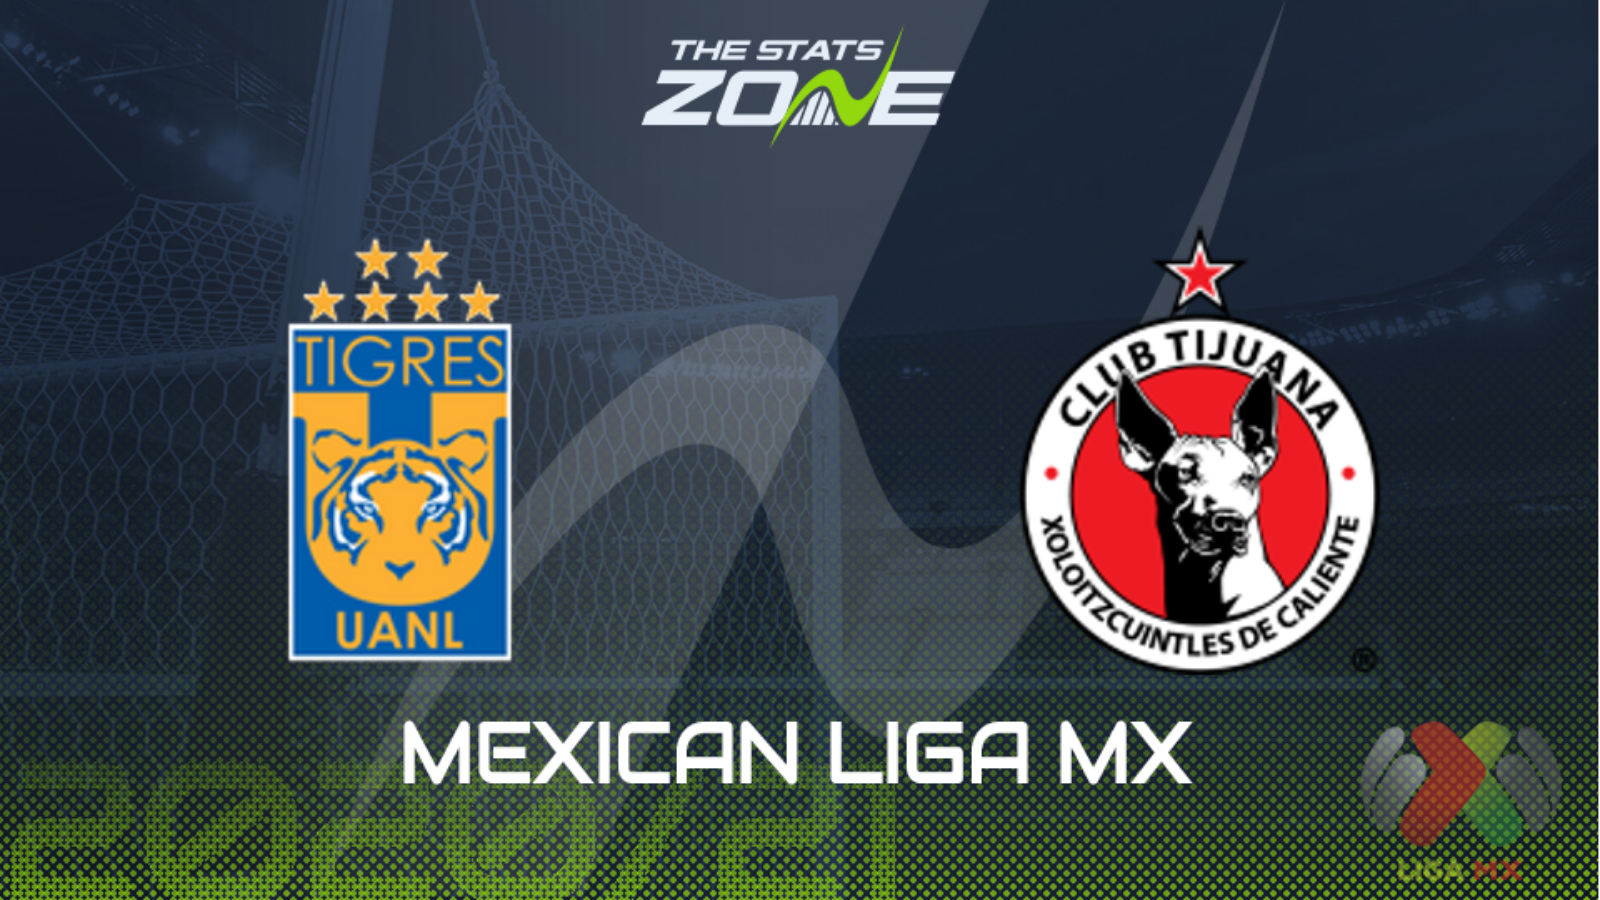 2020 21 Mexican Liga Mx Tigres Uanl Vs Tijuana Preview Prediction The Stats Zone